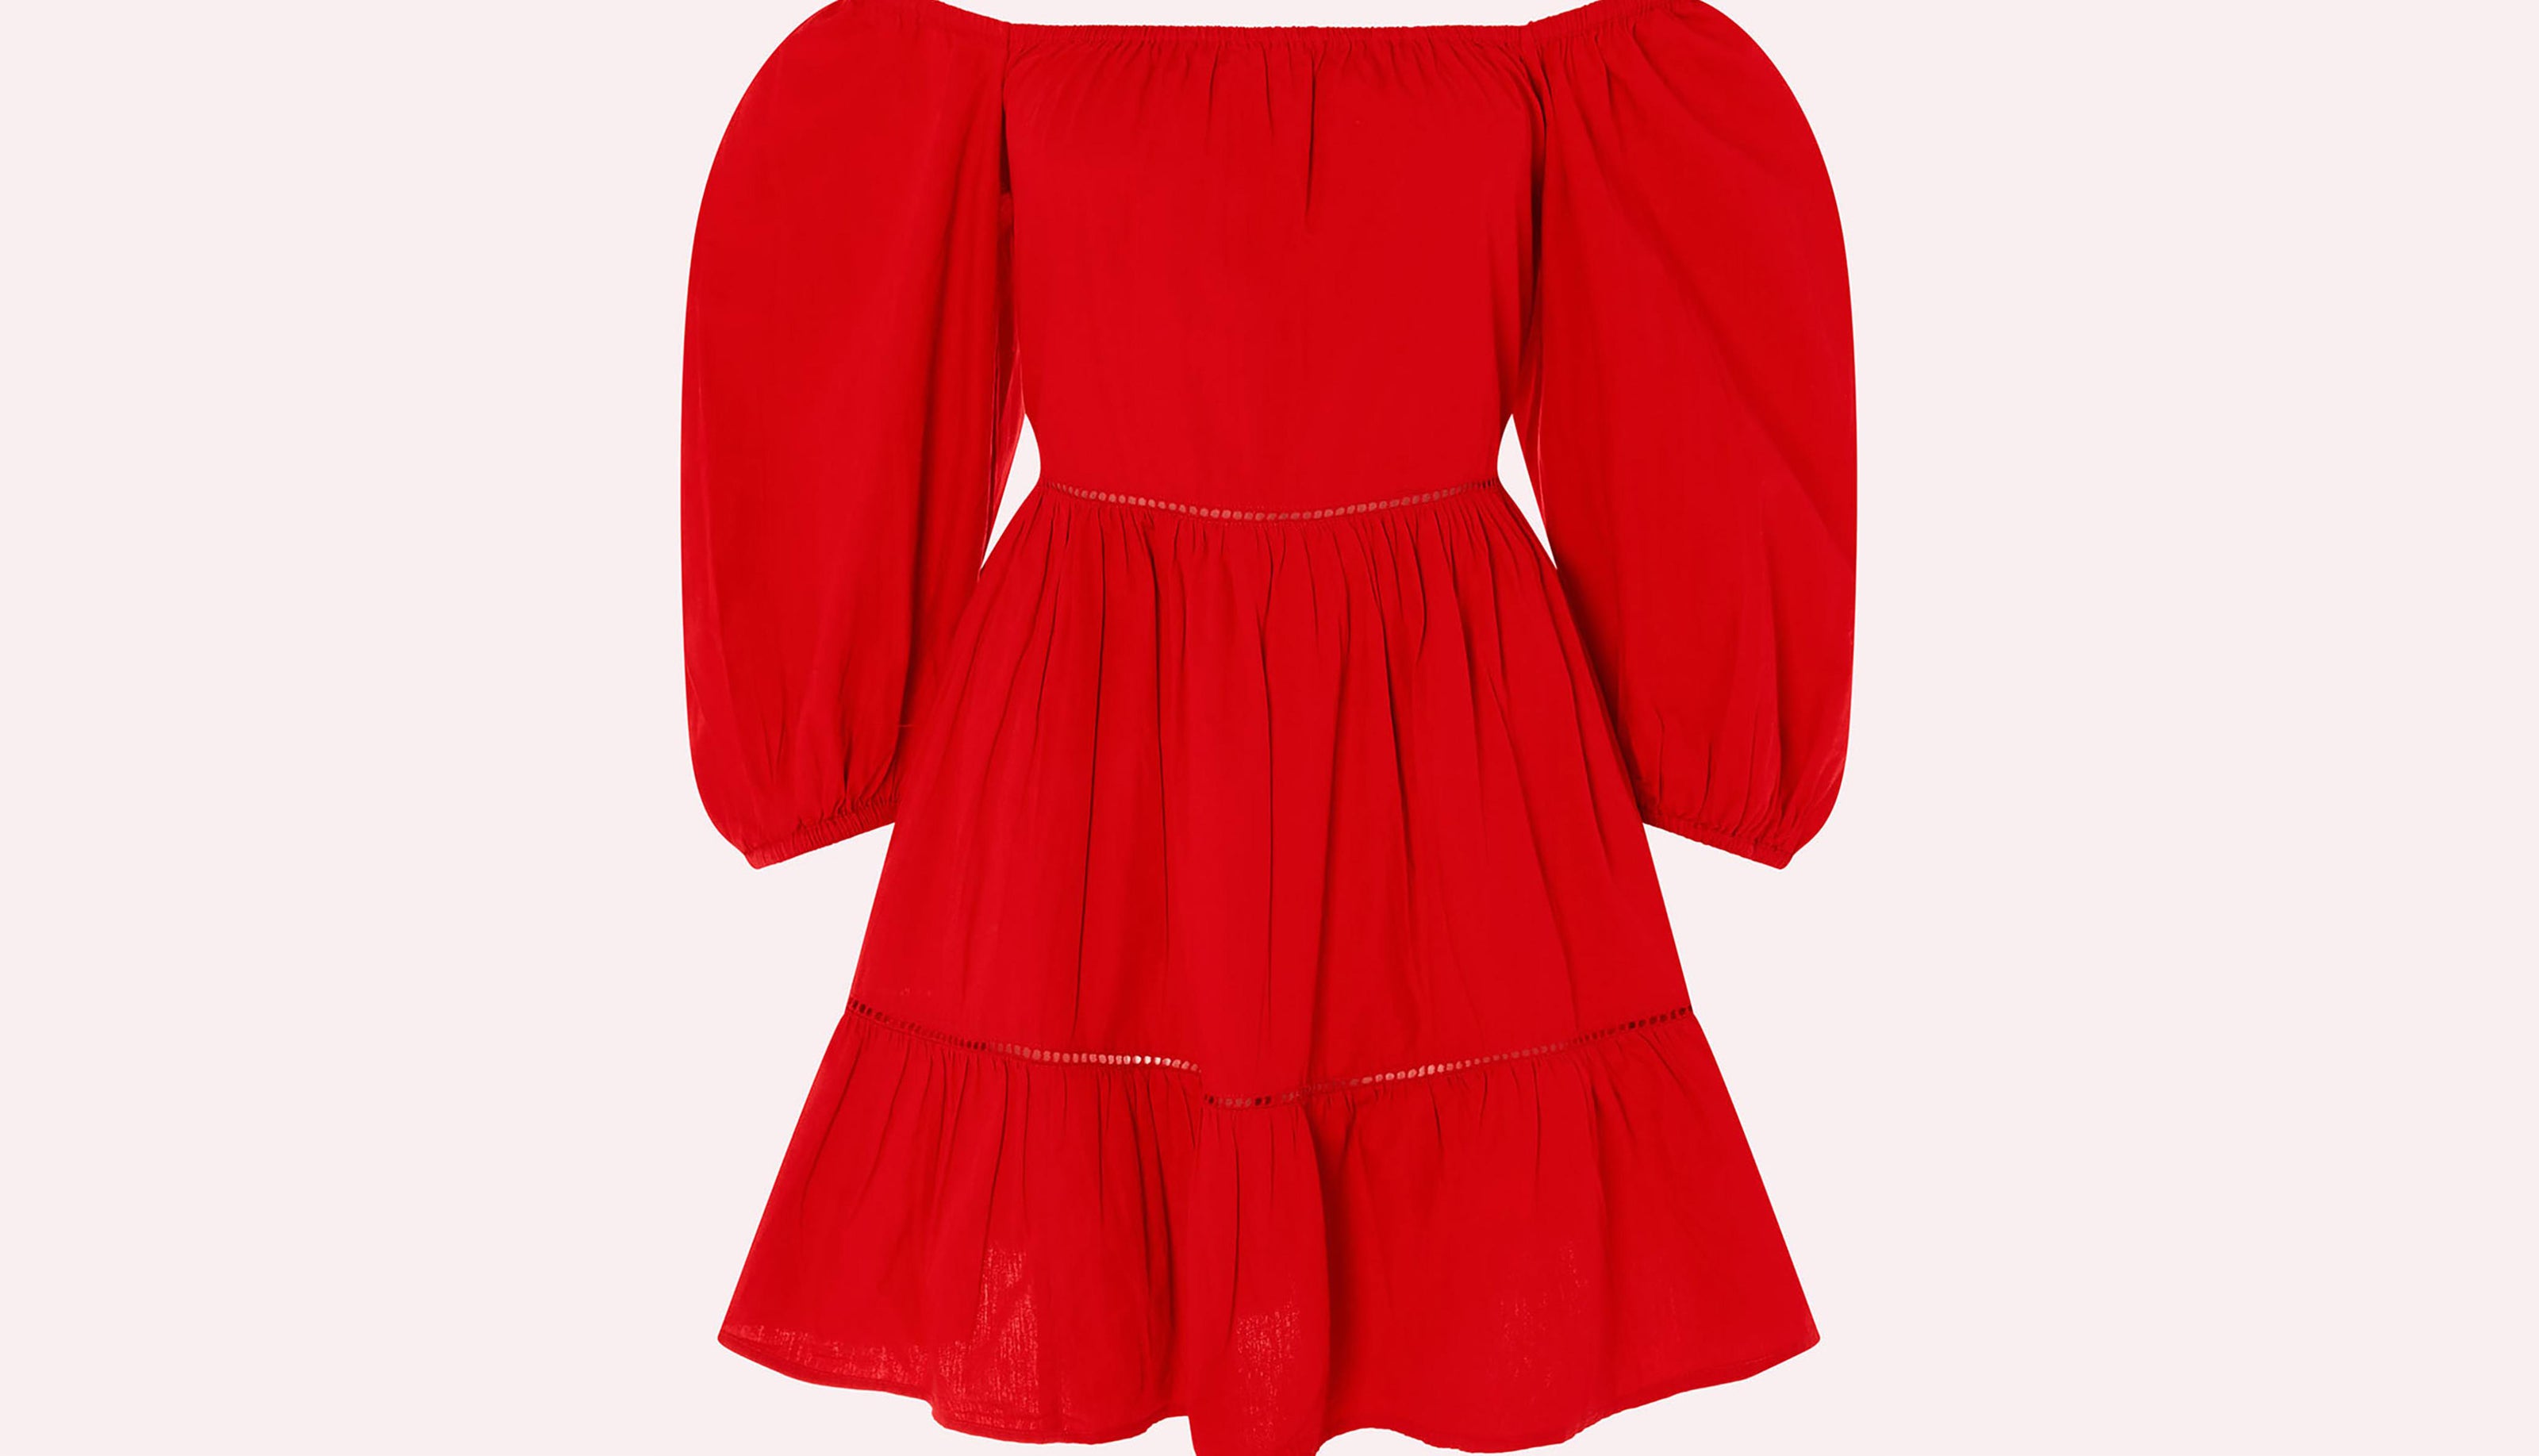 Accessorize Puff Sleeve Poplin Dress in Red, £45, Very